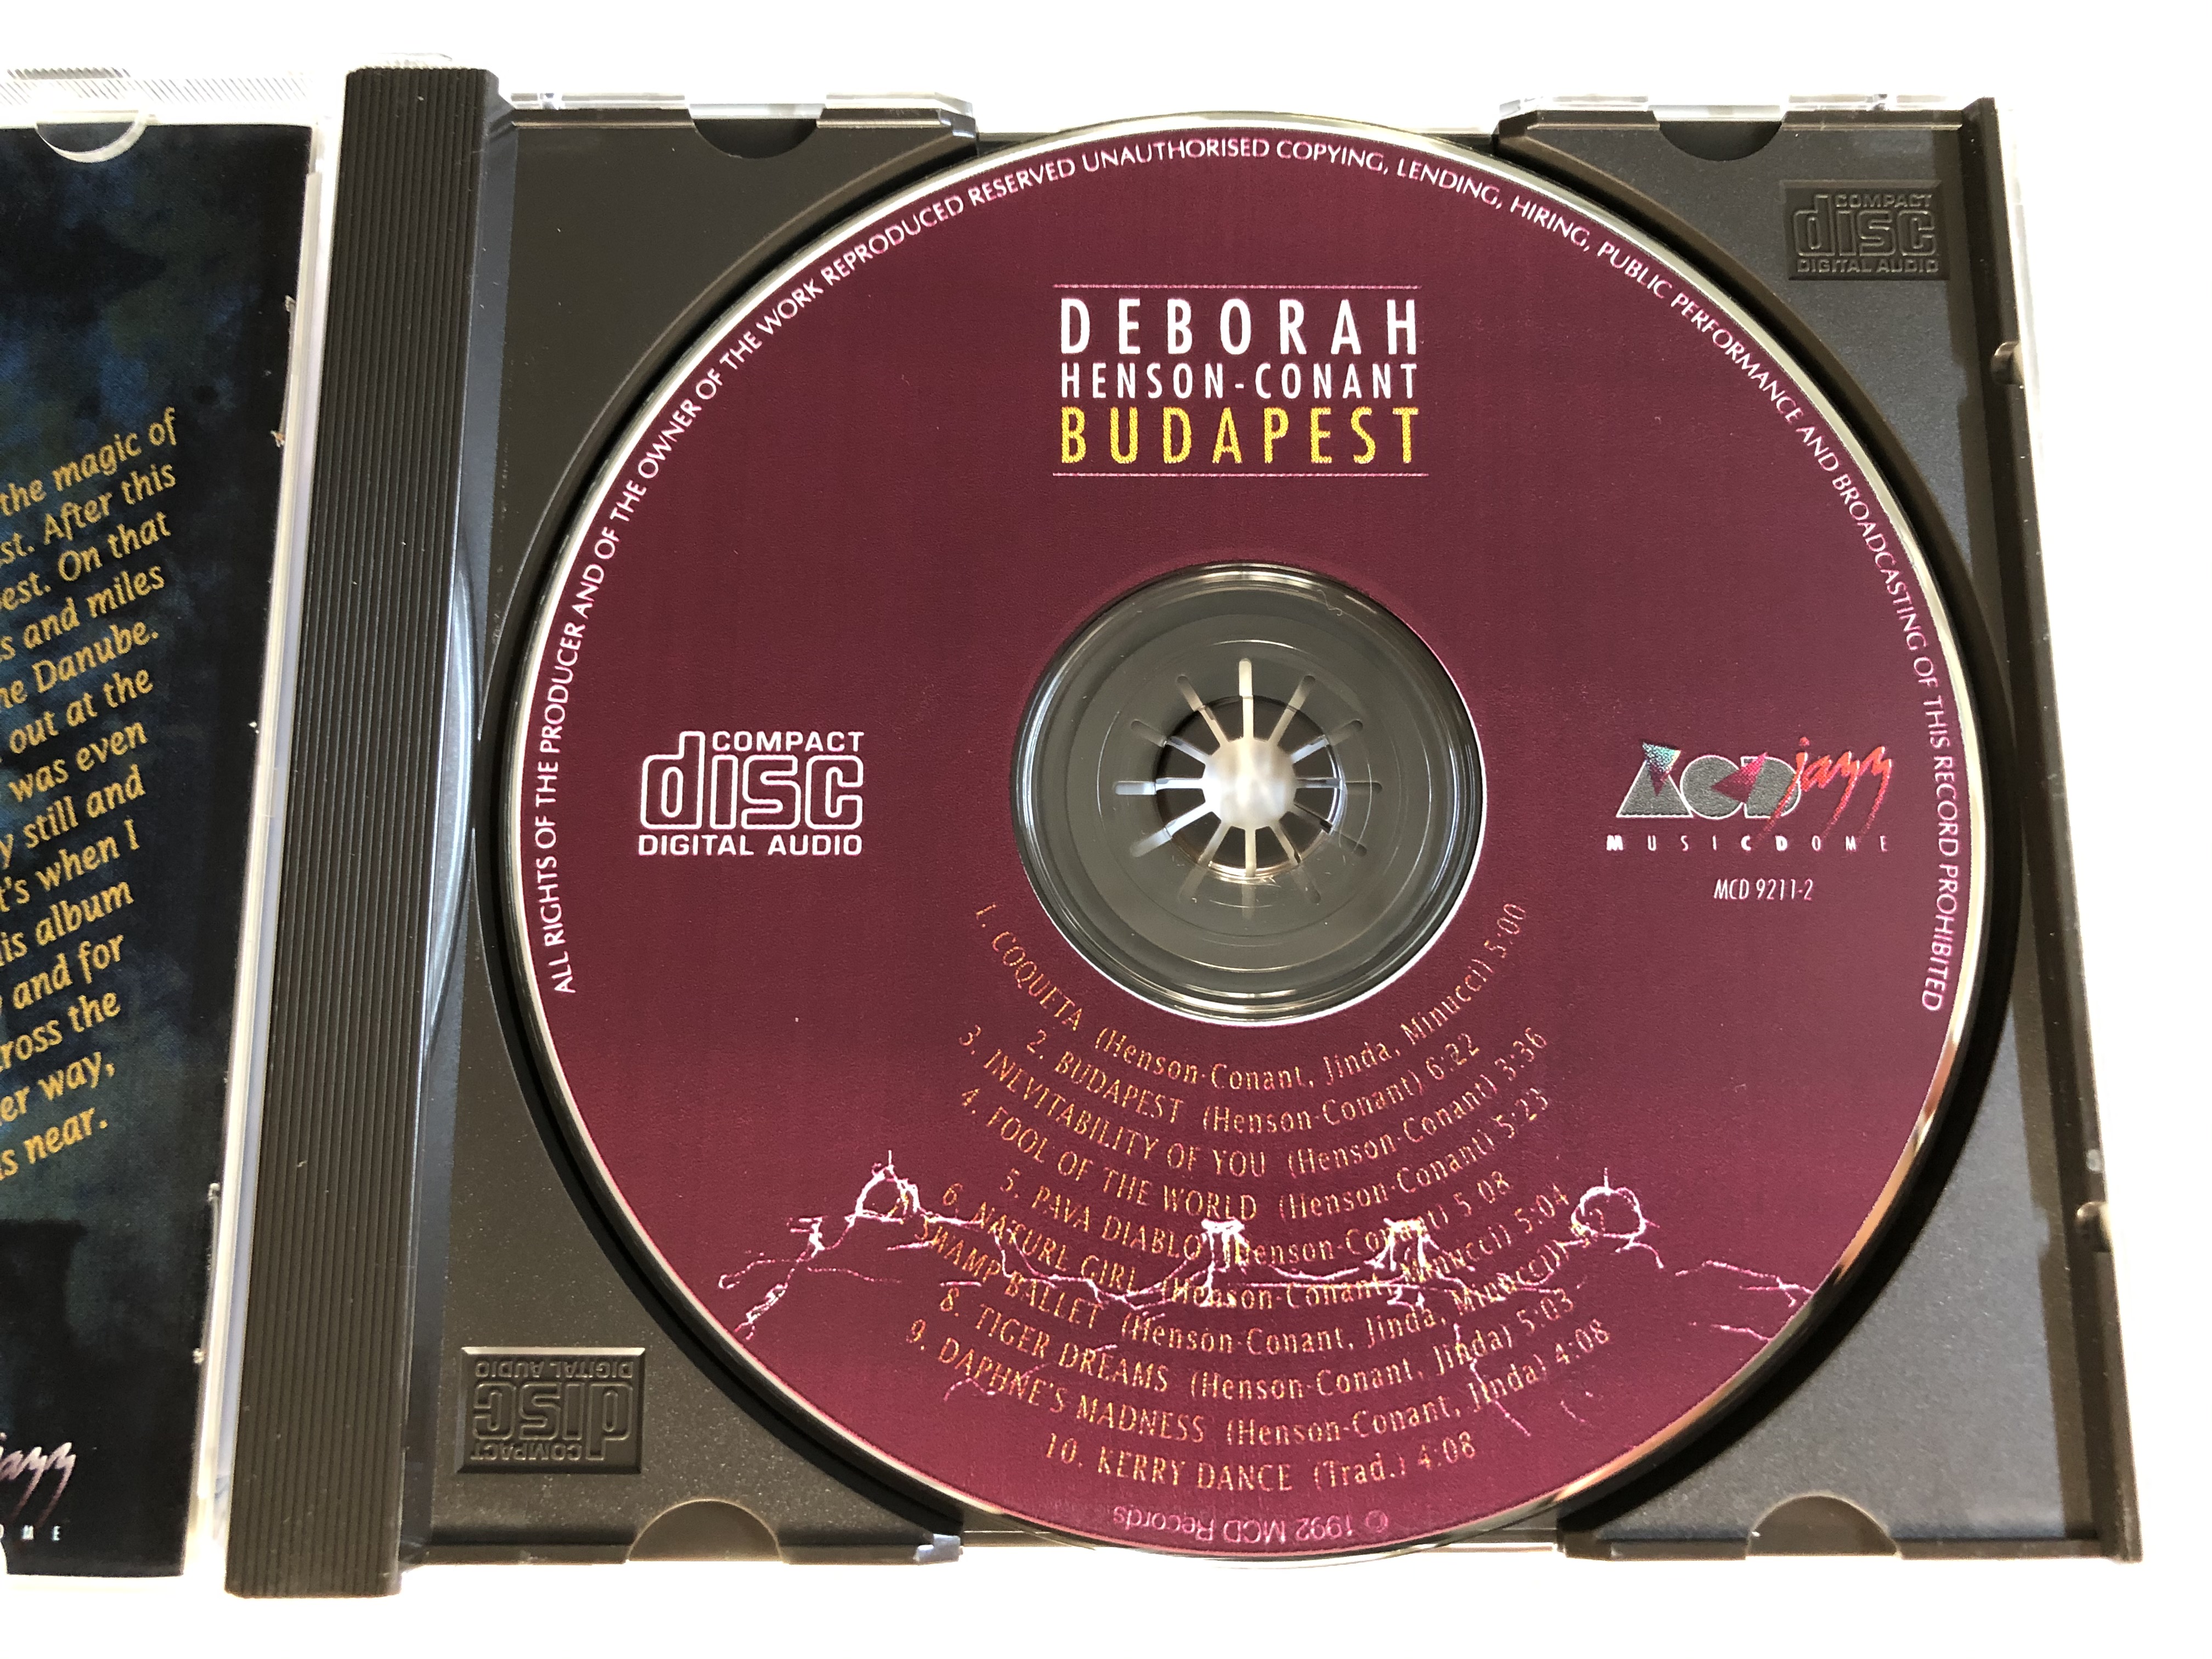 deborah-henson-conant-budapest-musicdome-audio-cd-1992-mcd-9211-2-6-.jpg